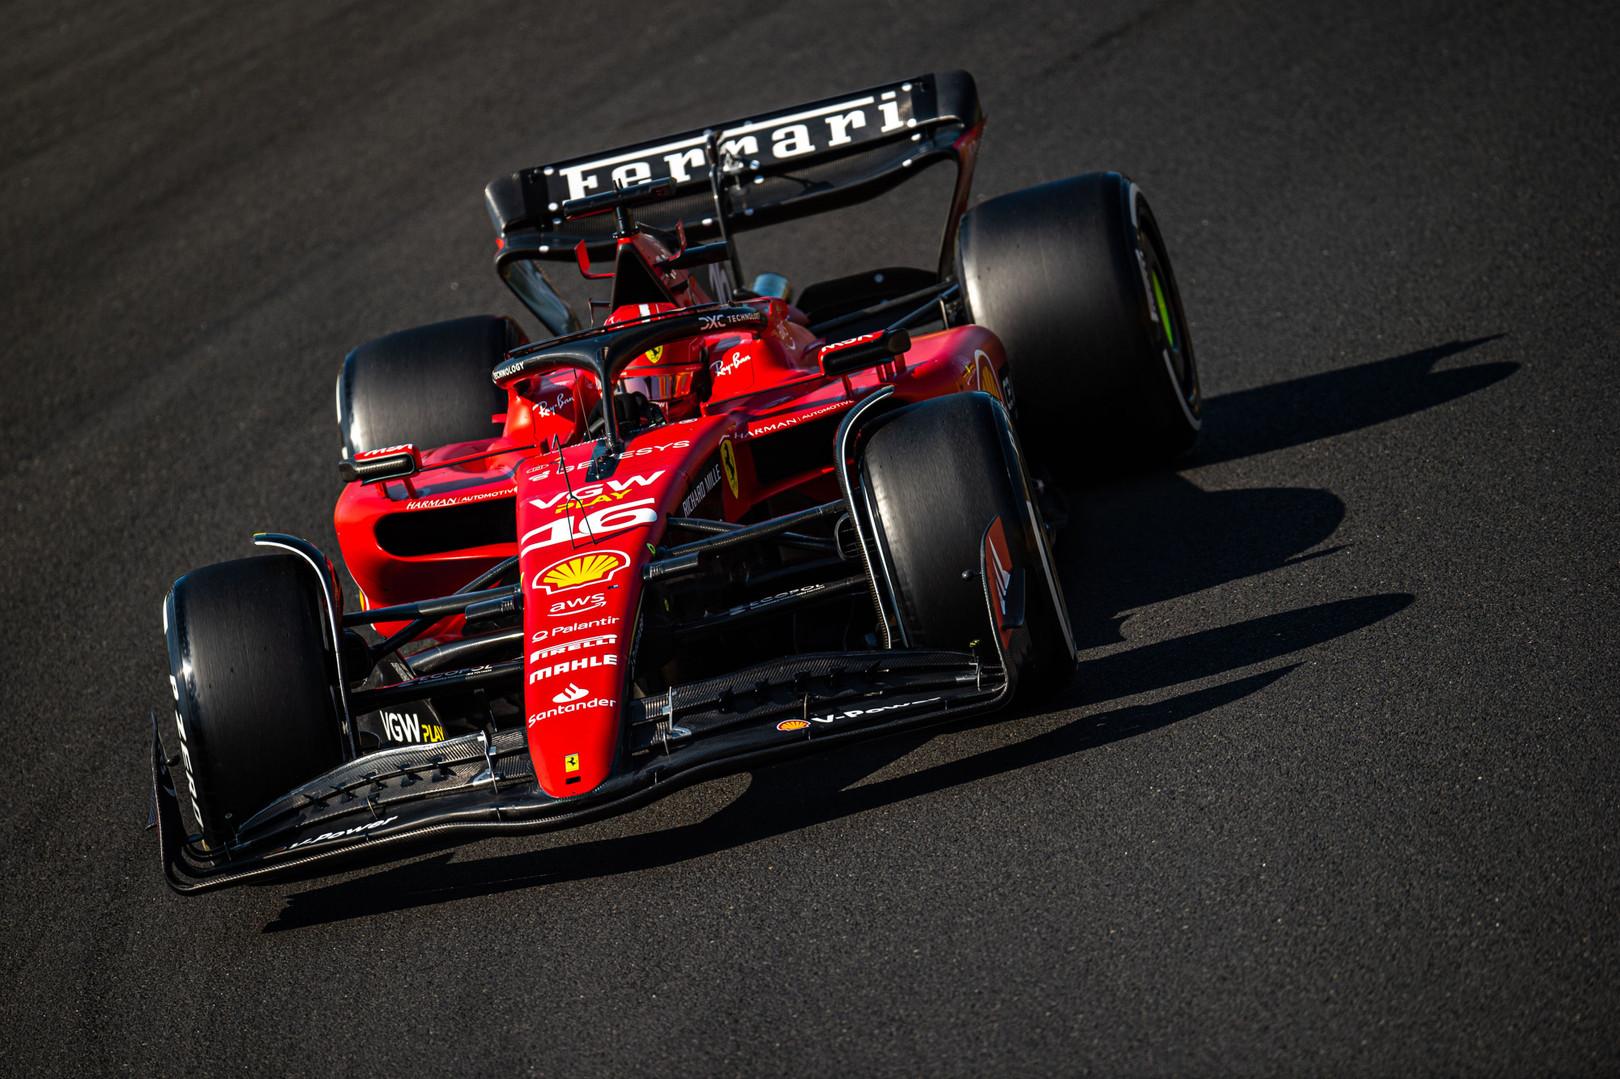 F1 News Ferrari Halt Updates To Focus On Ambitious Targets